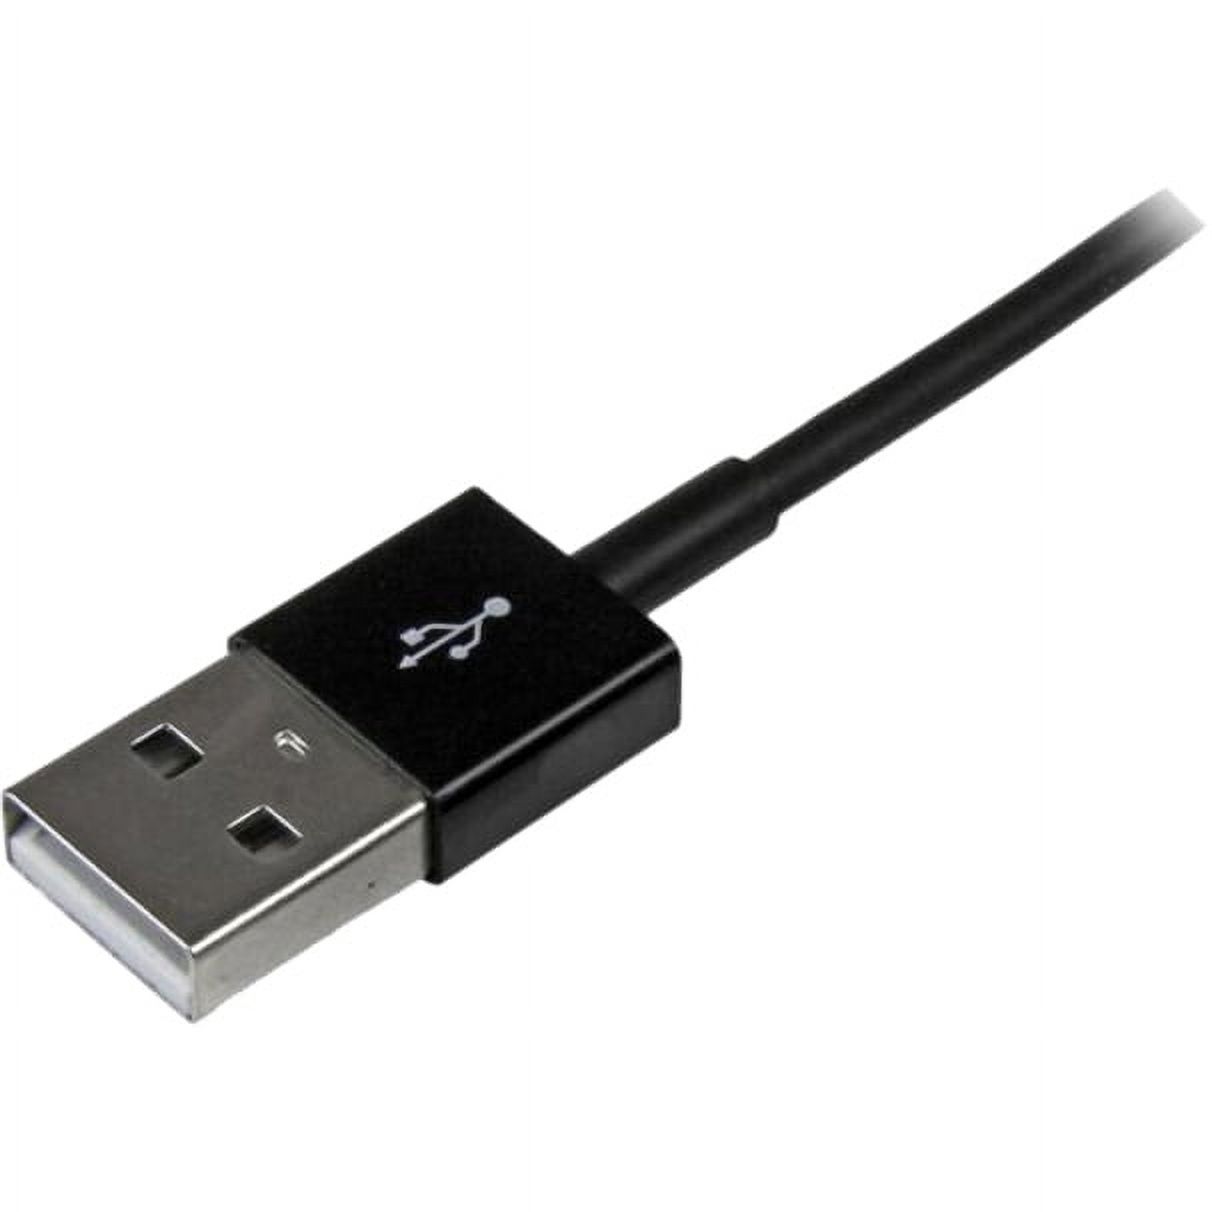 Startech USBLT1MBS USB to Lightning Cable Apple MFi Certified Slim 1 m (3 ft.) Black - image 4 of 4